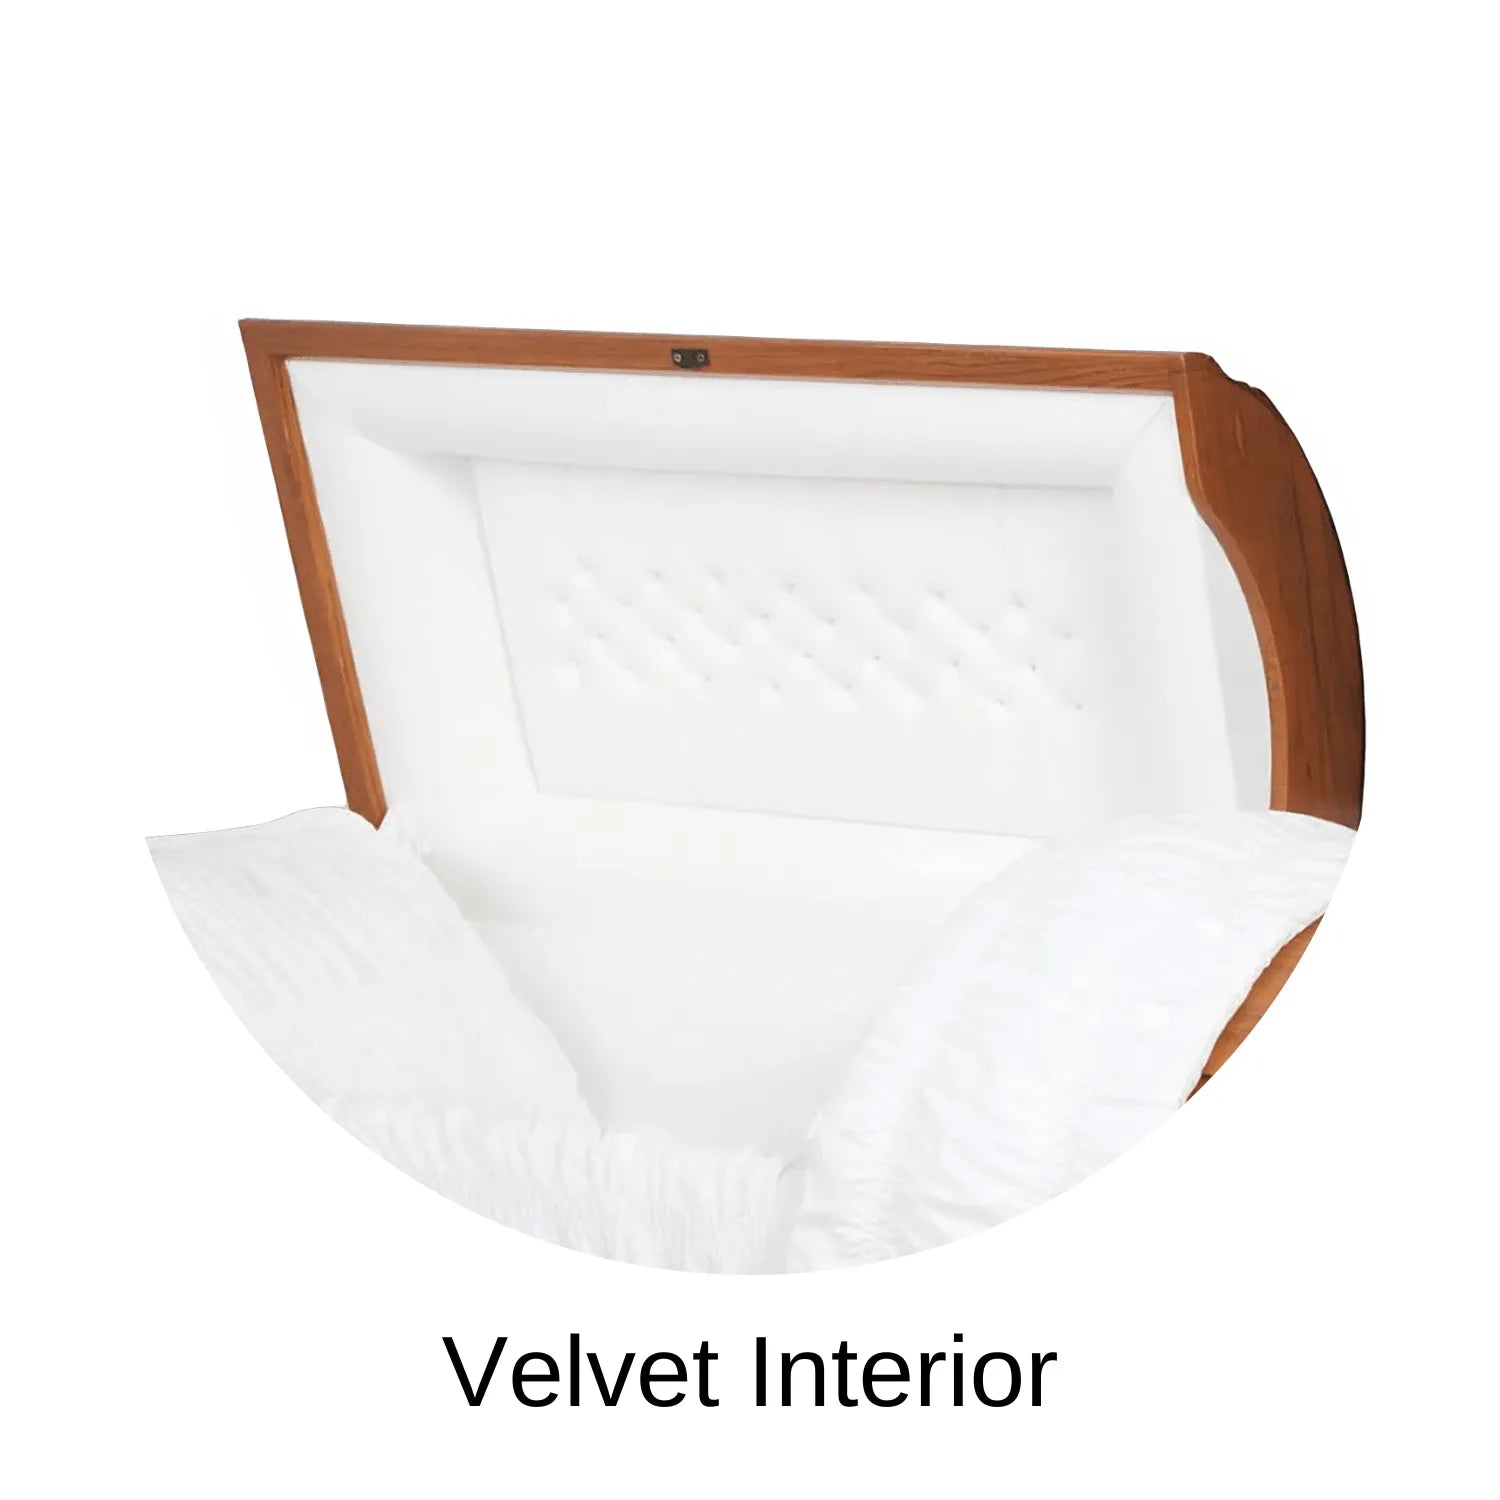 Velvet Interior Of Veneto (Oak) Series Wood Casket with Satin Finish